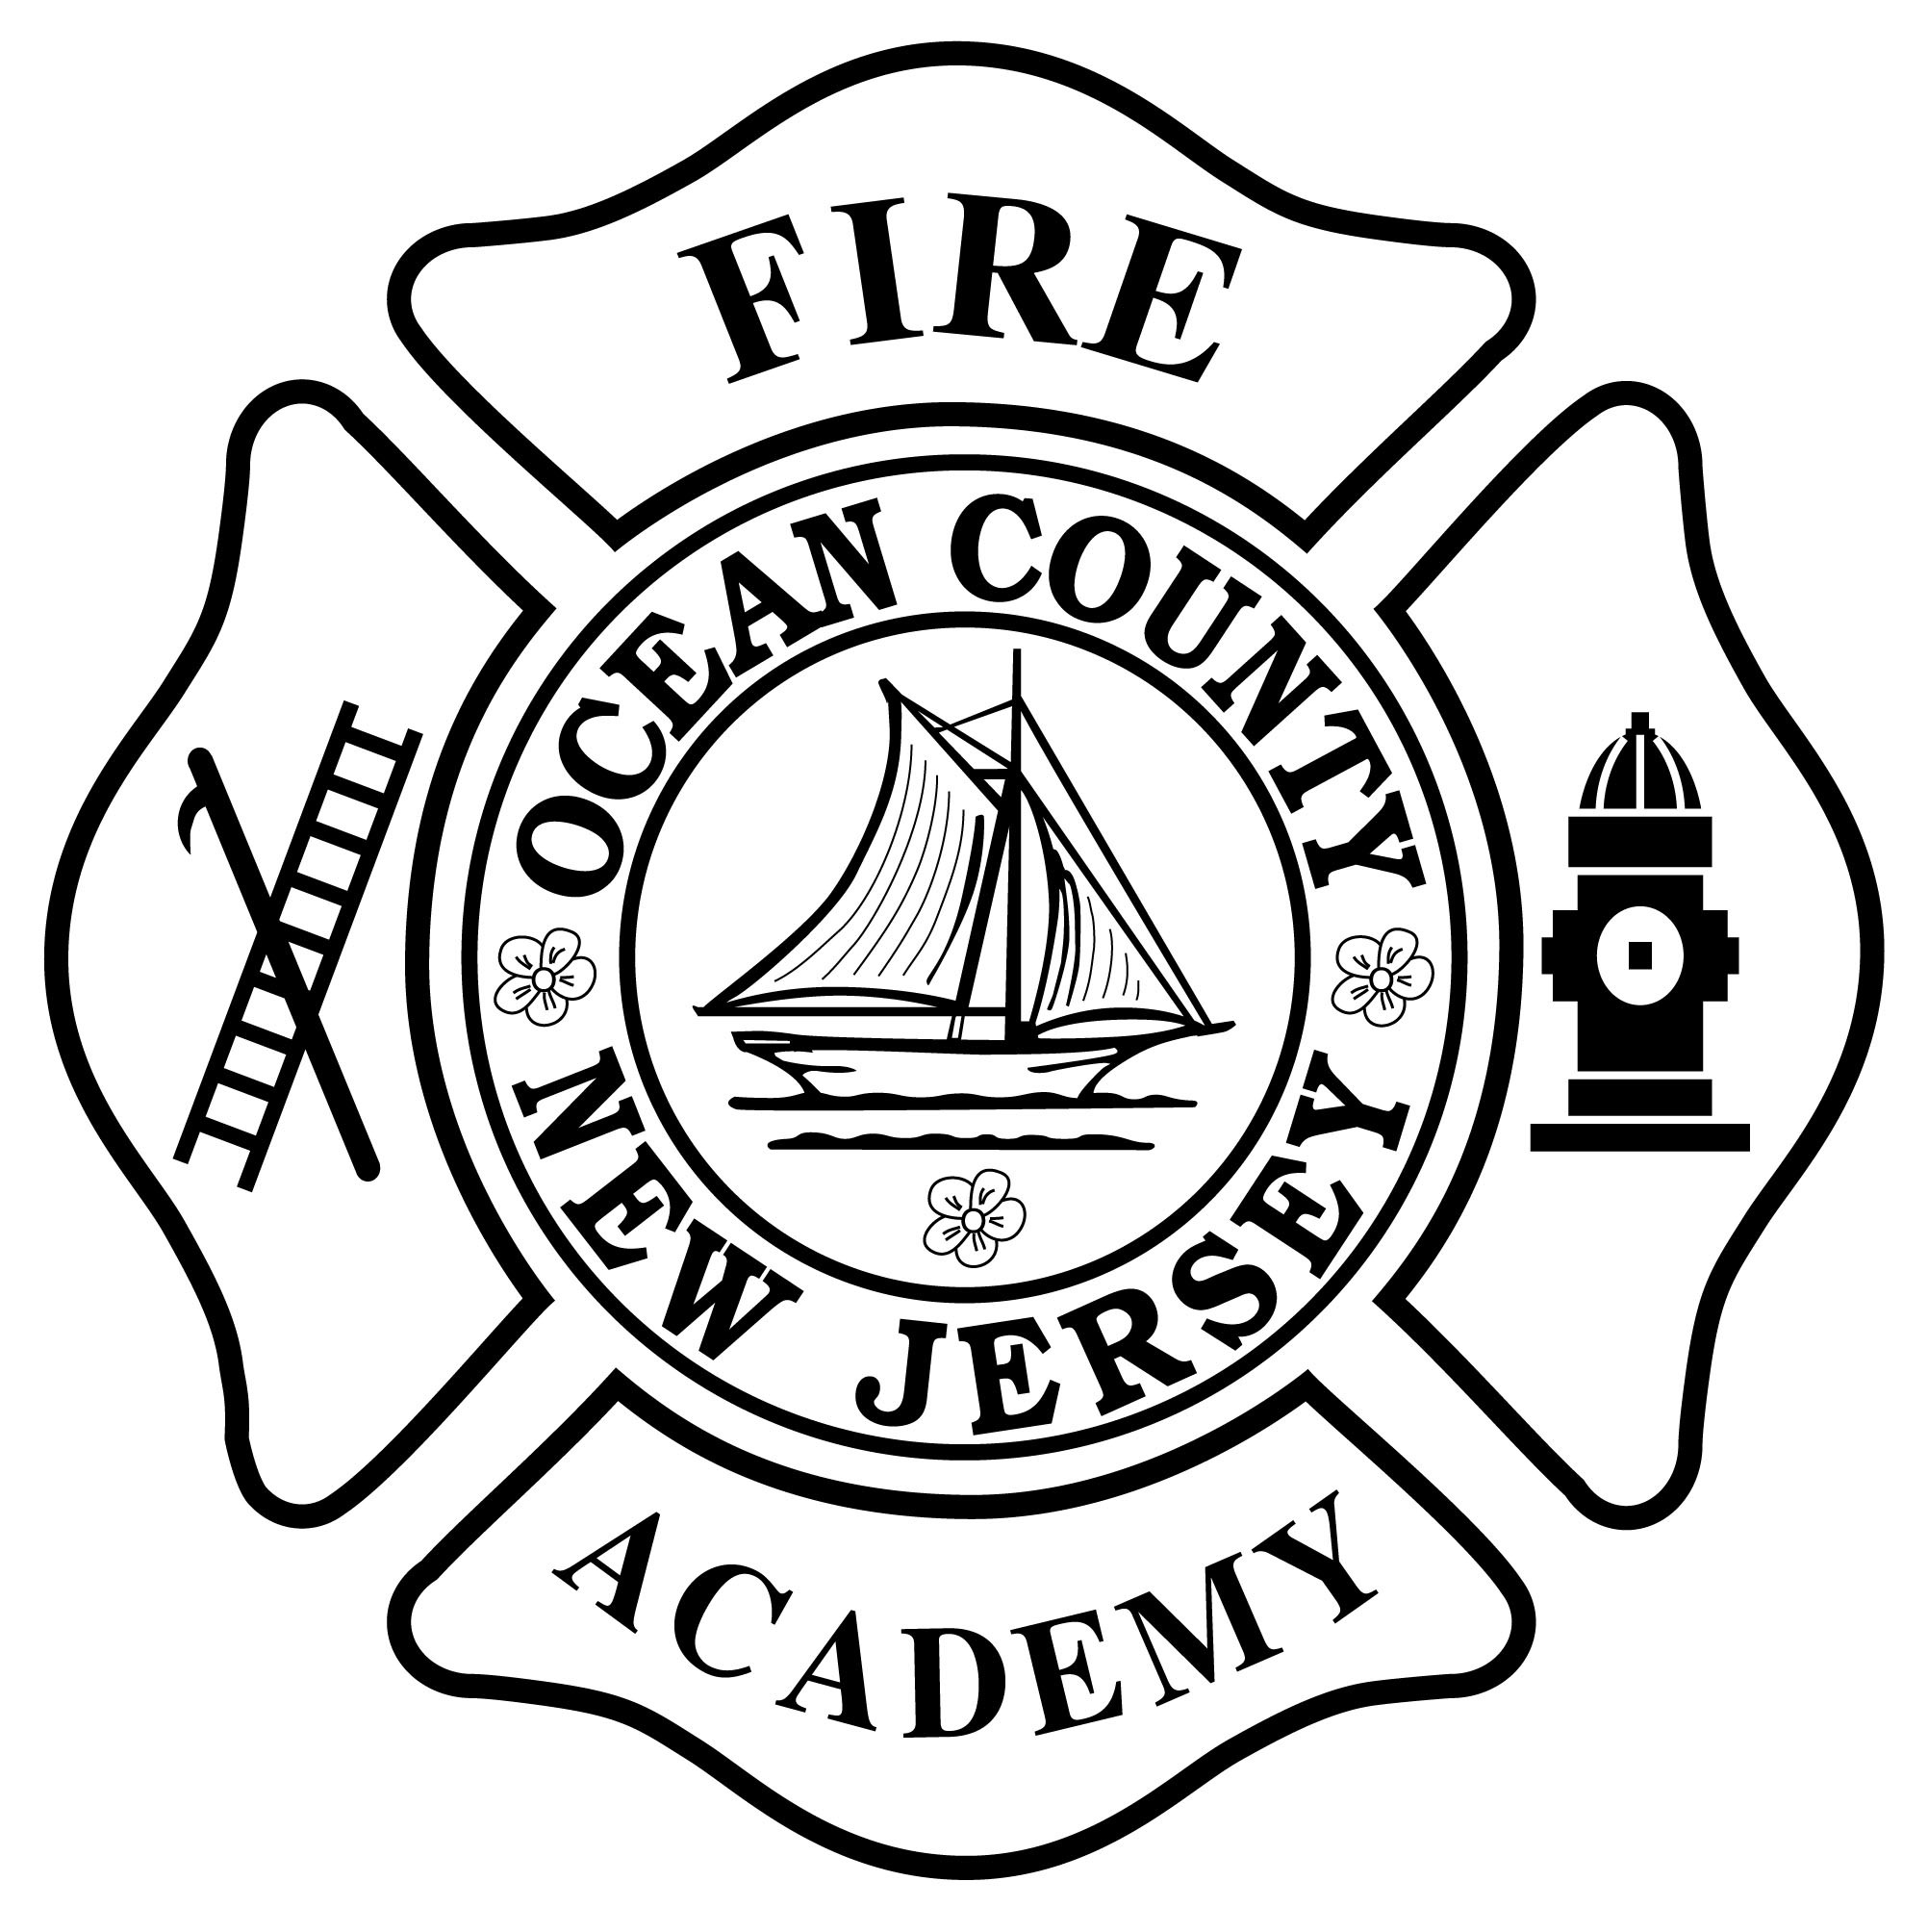 Ocean County Fire & EMS Training Center